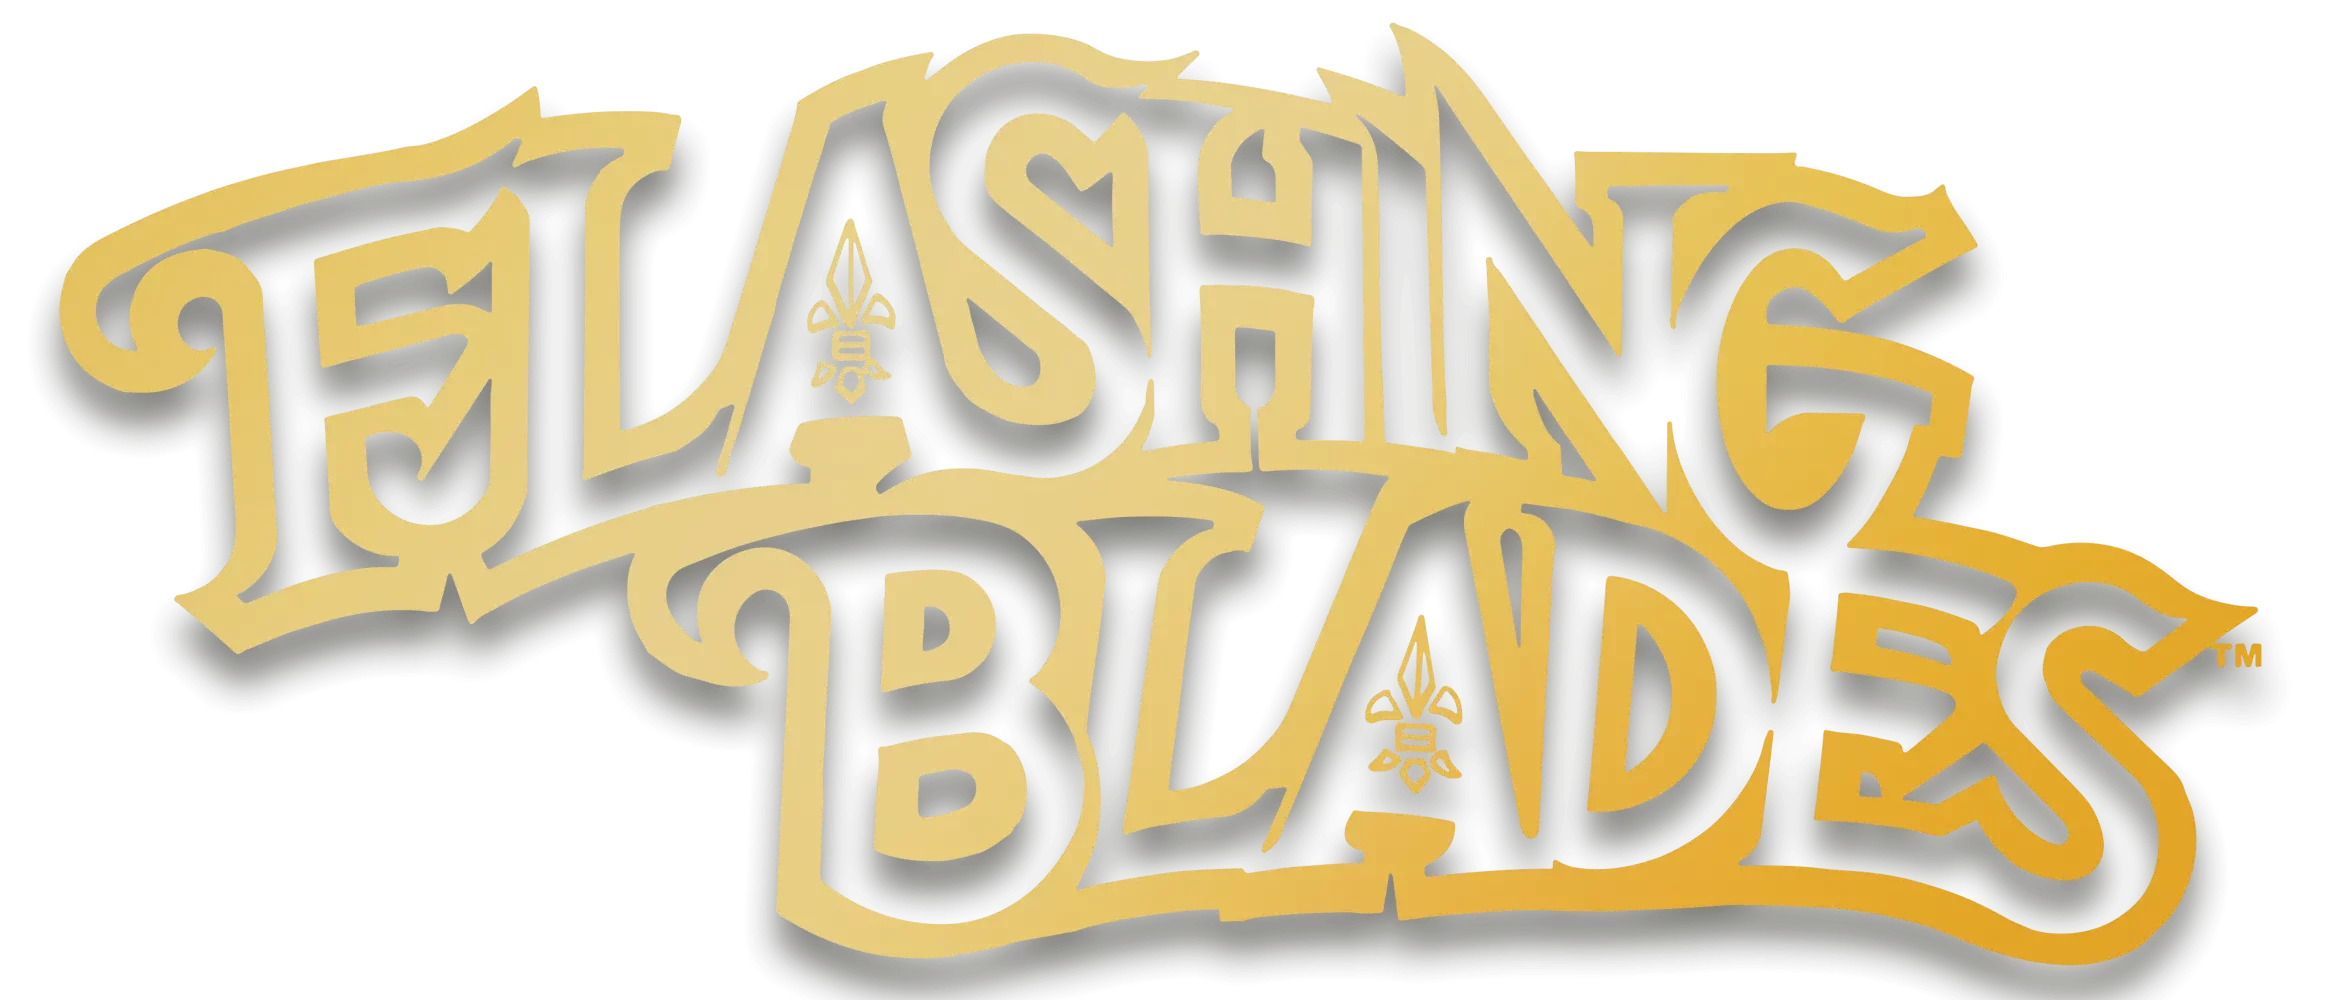 Classic Flashing Blades Logo